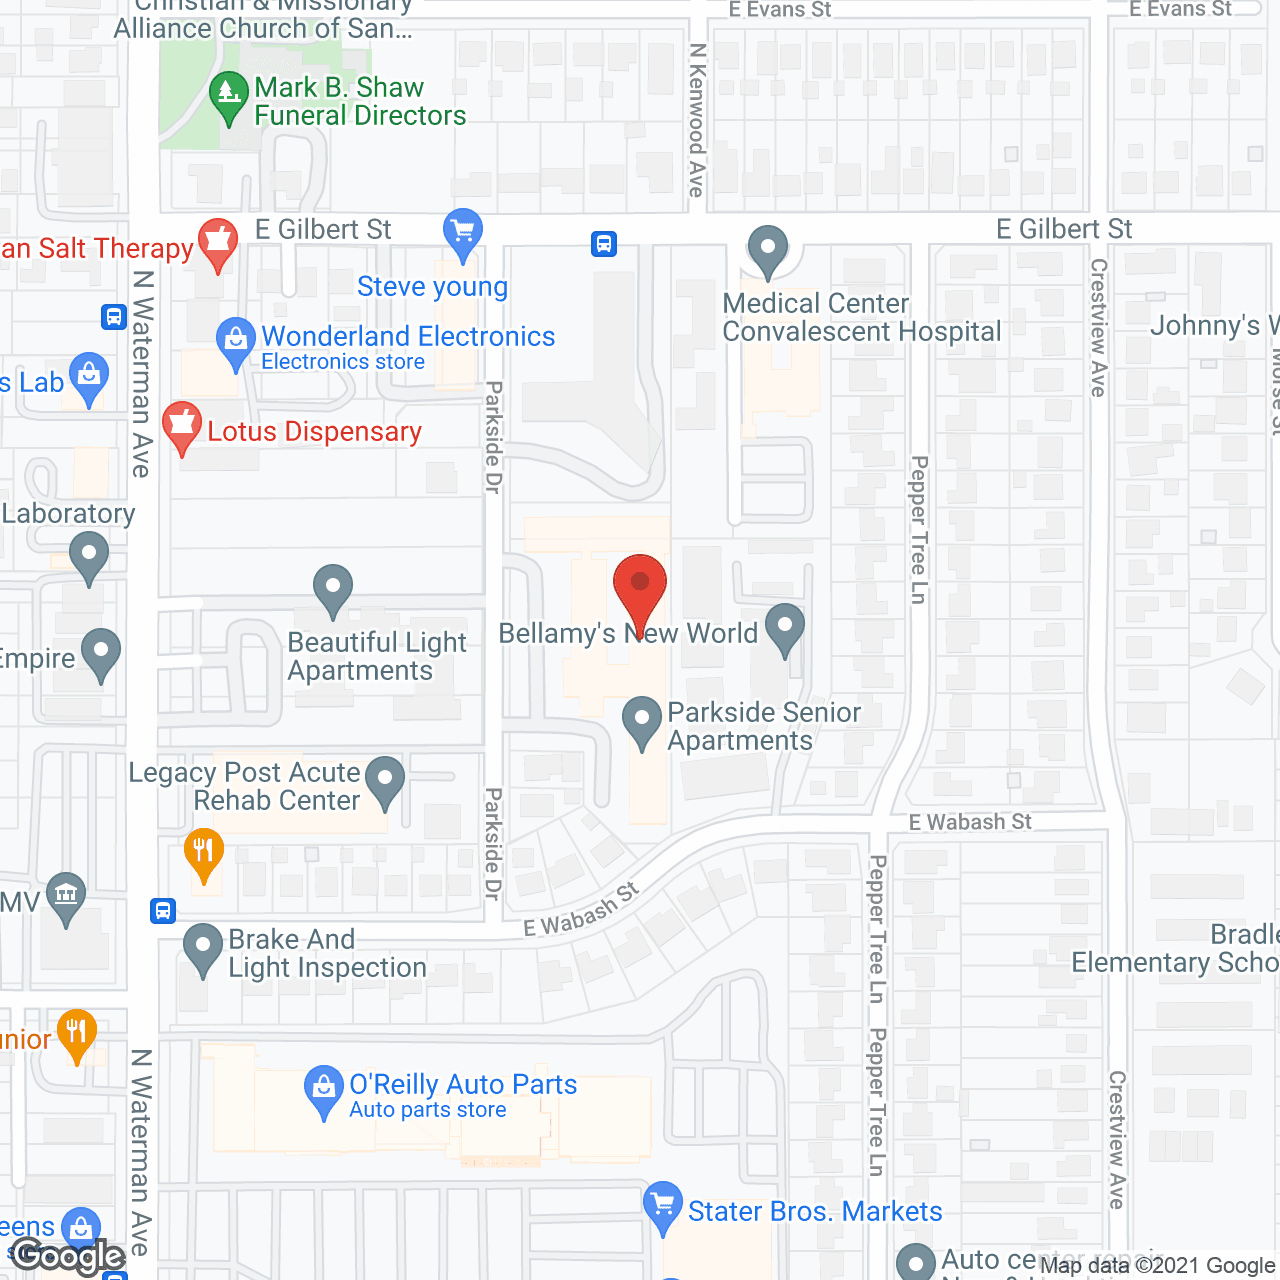 Parkside Senior Apartments in google map